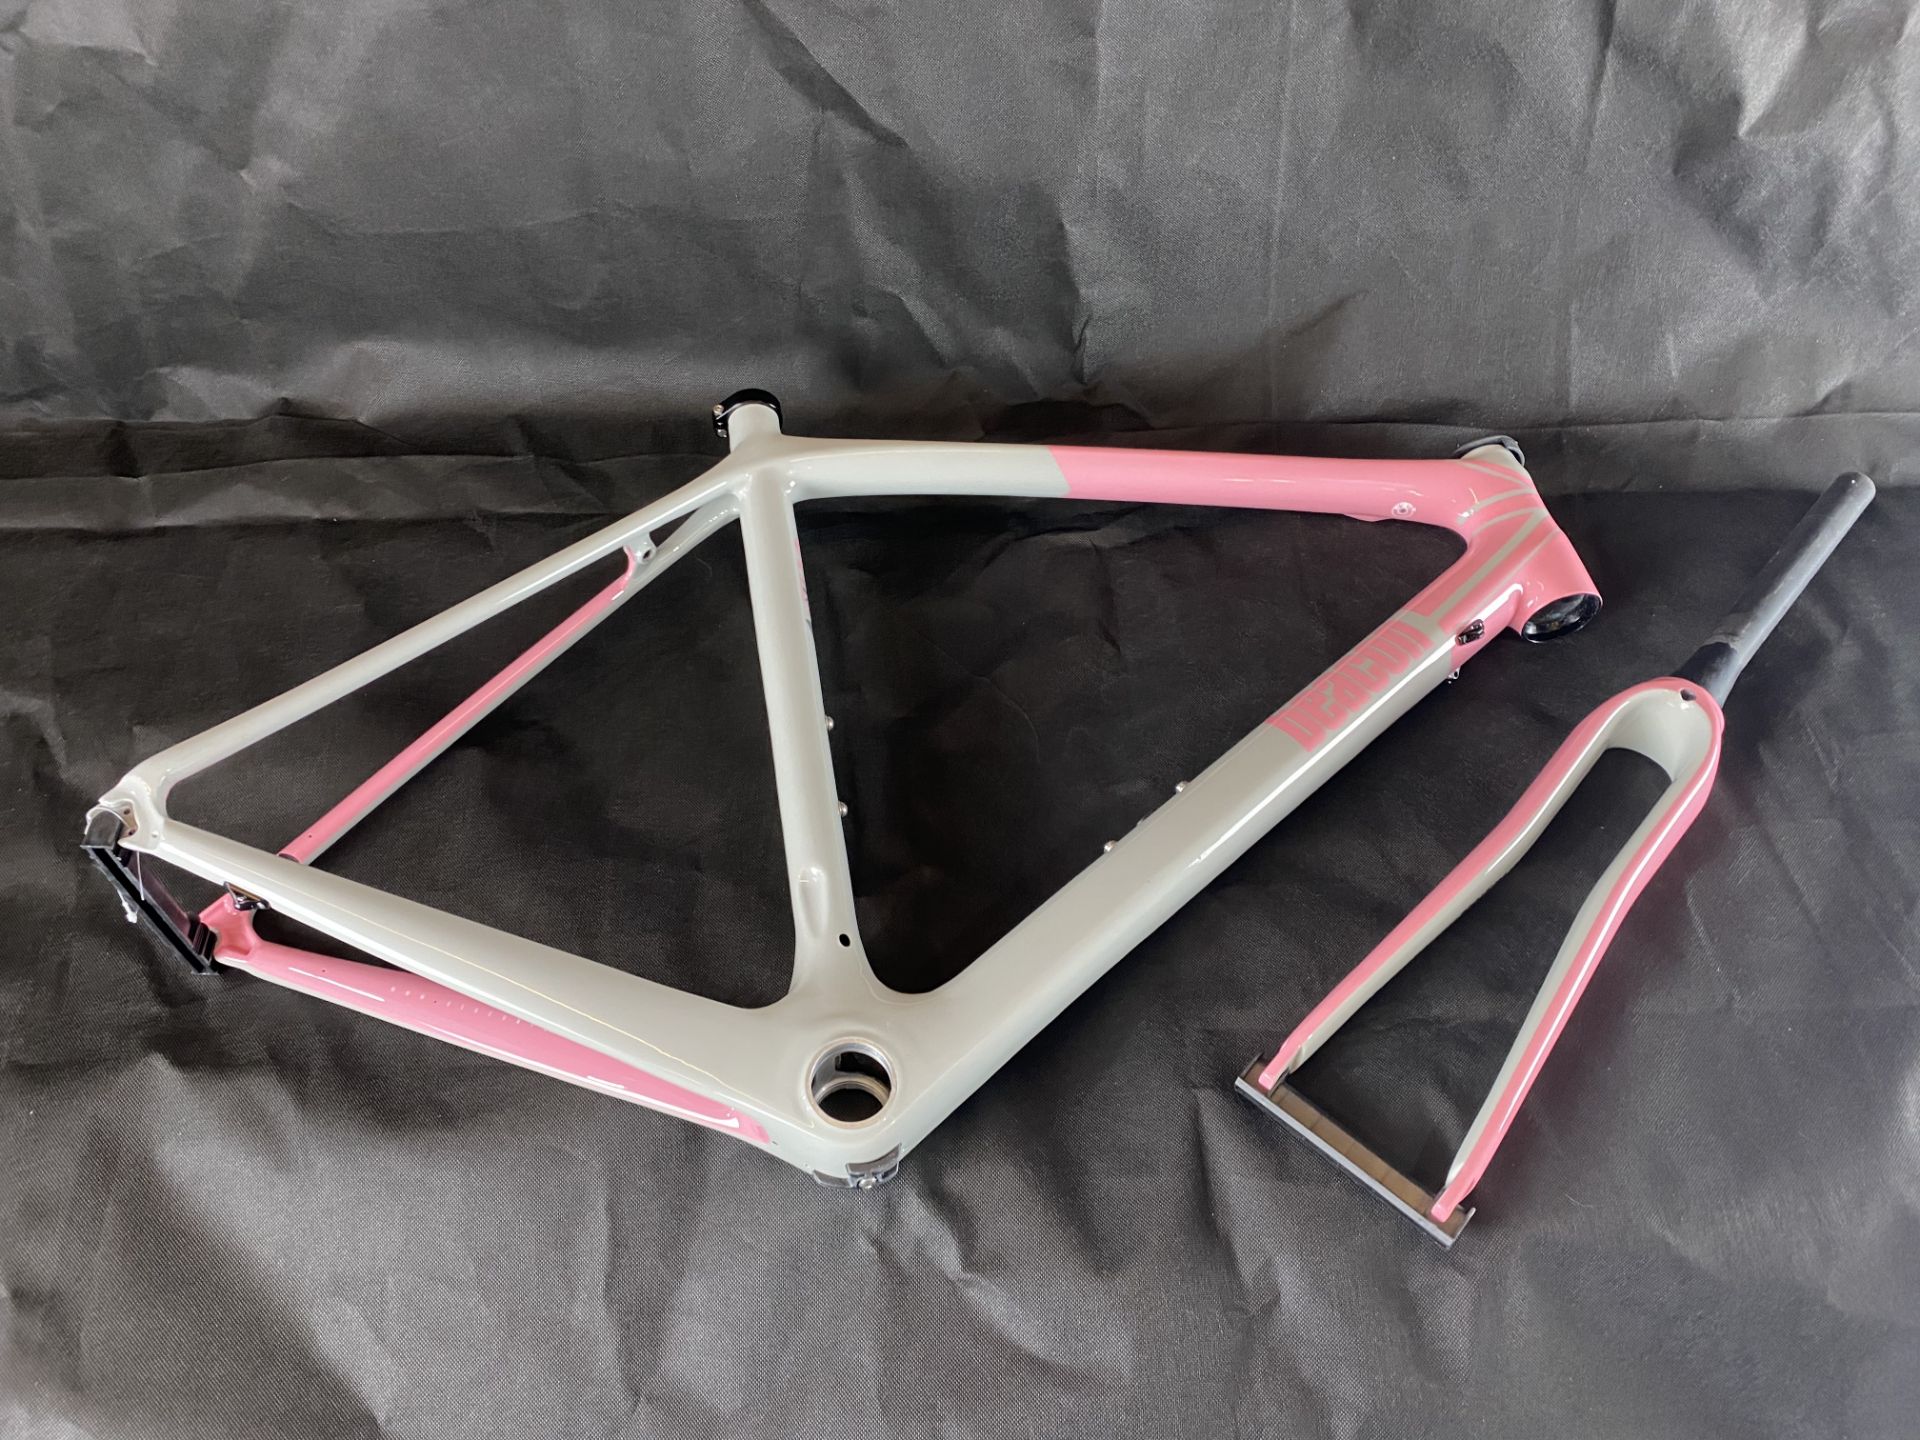 1 x Beacon Model BF-70, Size 590, Carbon Fibre Bike Frame in Pink & Grey.